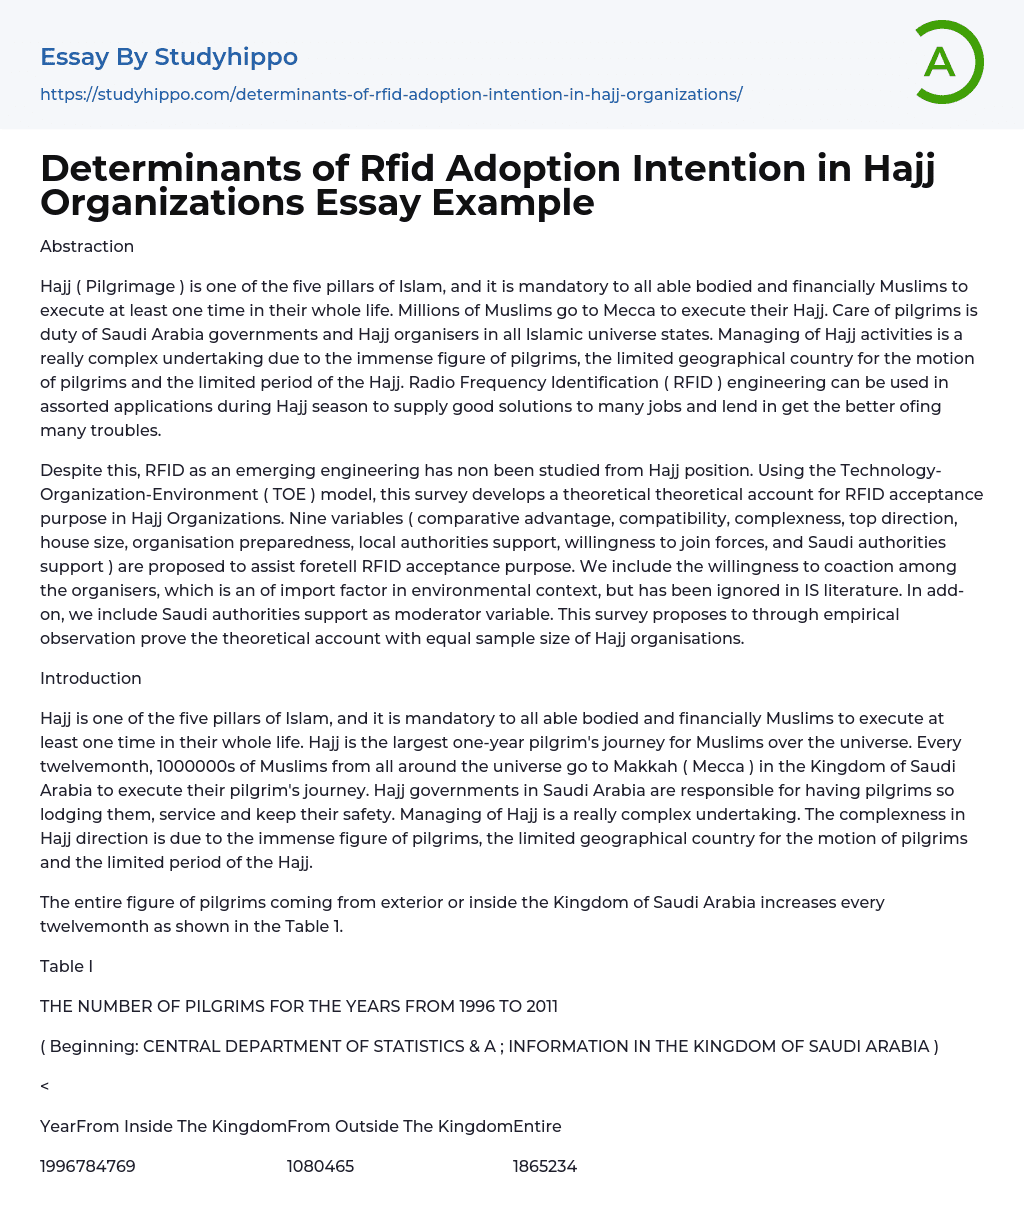 Determinants of Rfid Adoption Intention in Hajj Organizations Essay Example